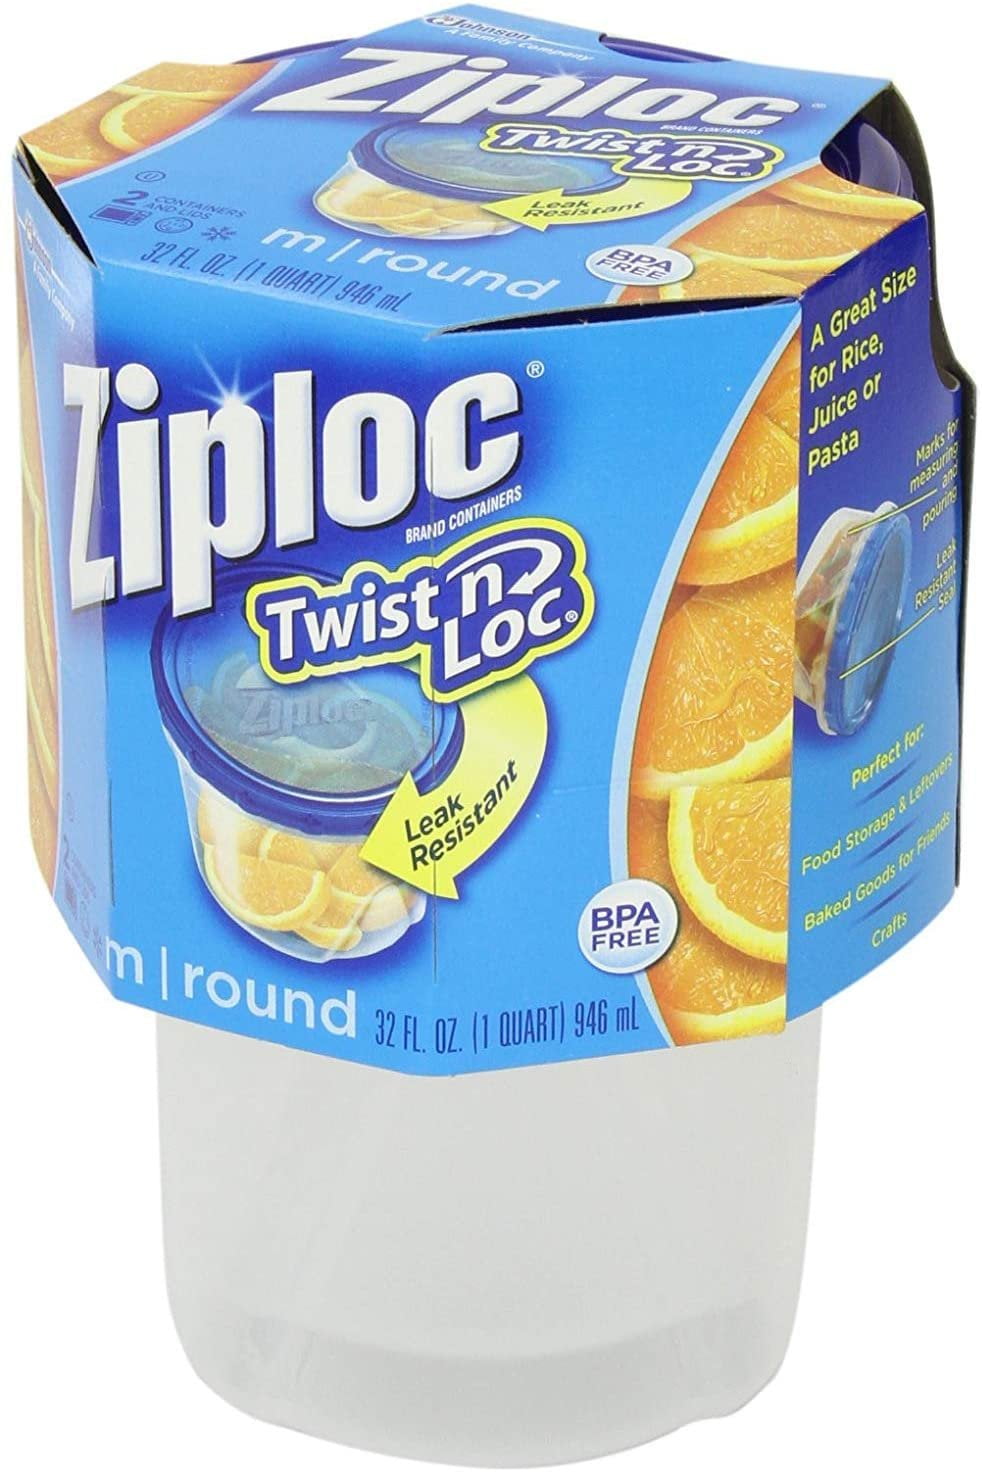 Ziploc 32 oz. Medium Twist 'n Loc Food Containers with Lids 2pk old style  NIB